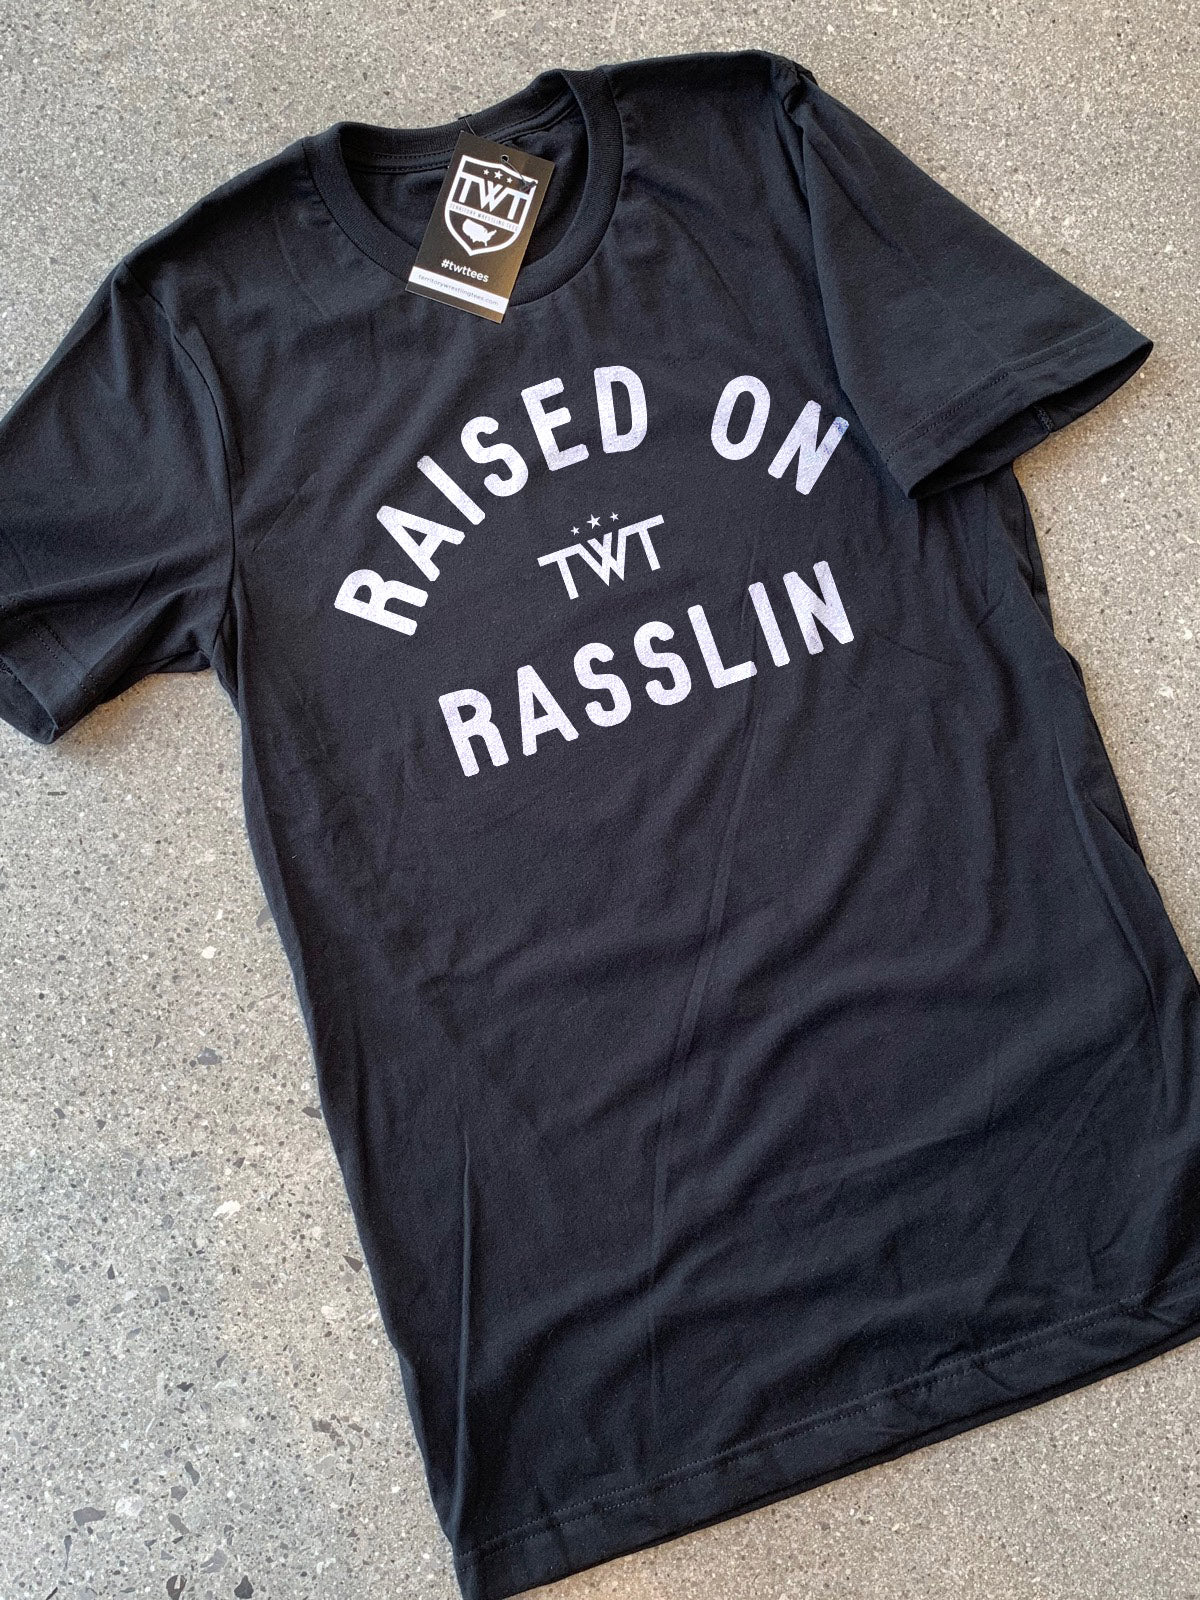 The Raised on Rasslin' 3.0 Tee